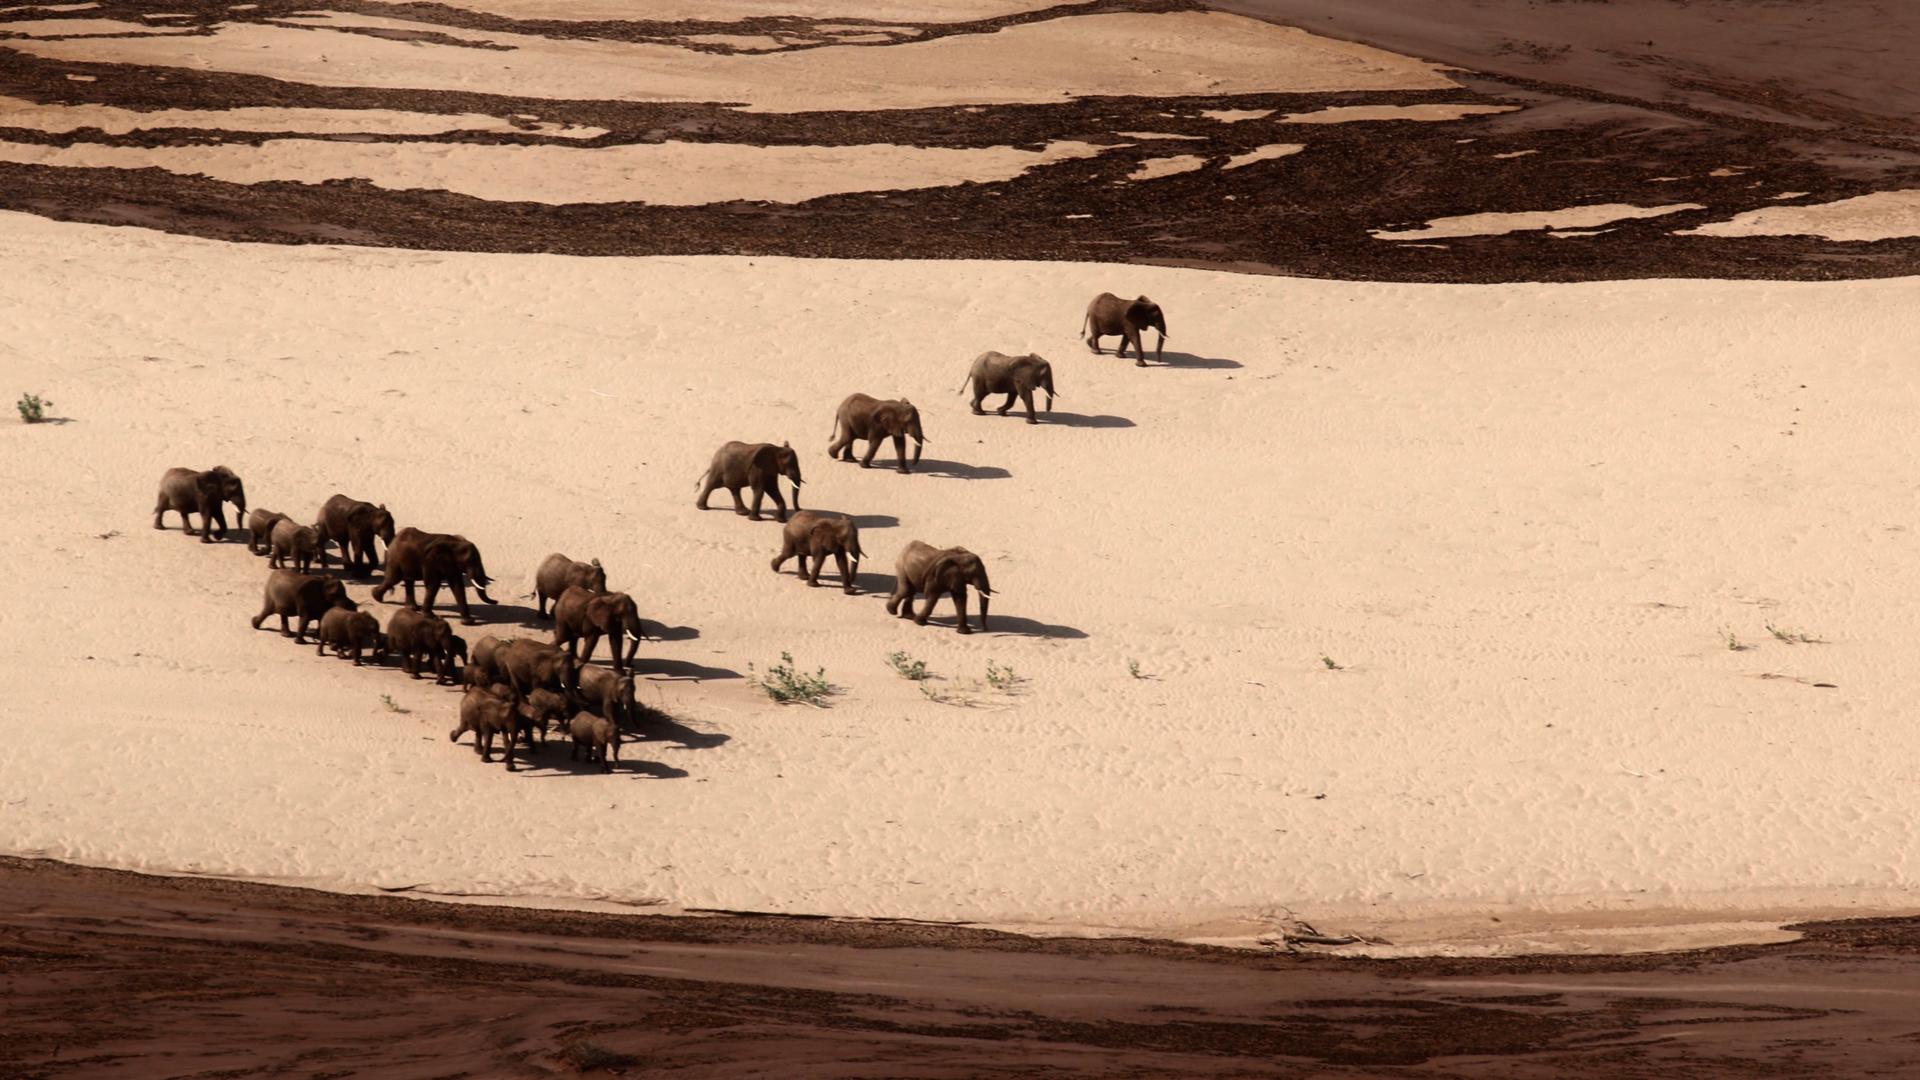 Elephants and the Samburu